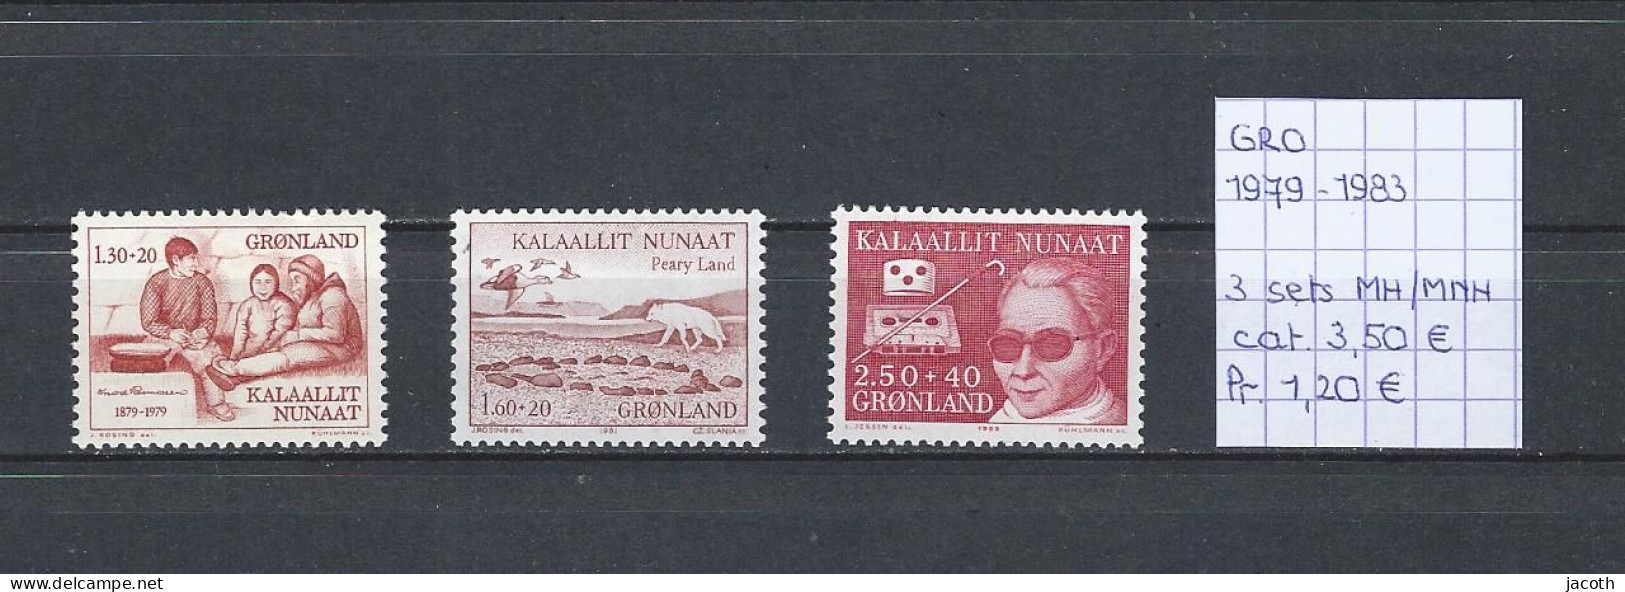 (TJ) Groenland 1979-'83 - 3 Sets (MNH/MH) - Neufs